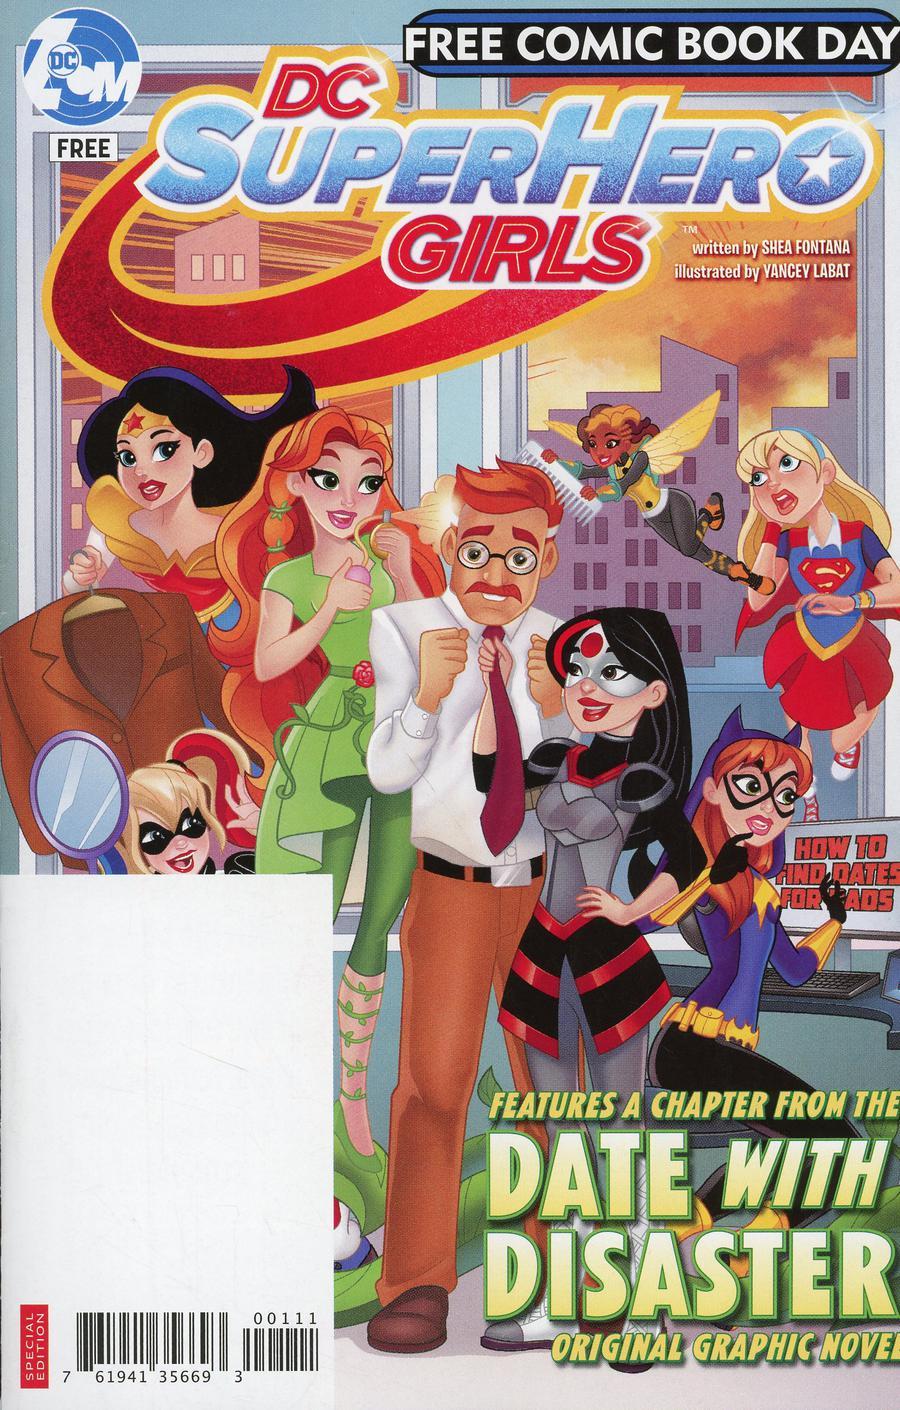 FCBD 2018 DC Super Hero Girls Vol. 1 #1